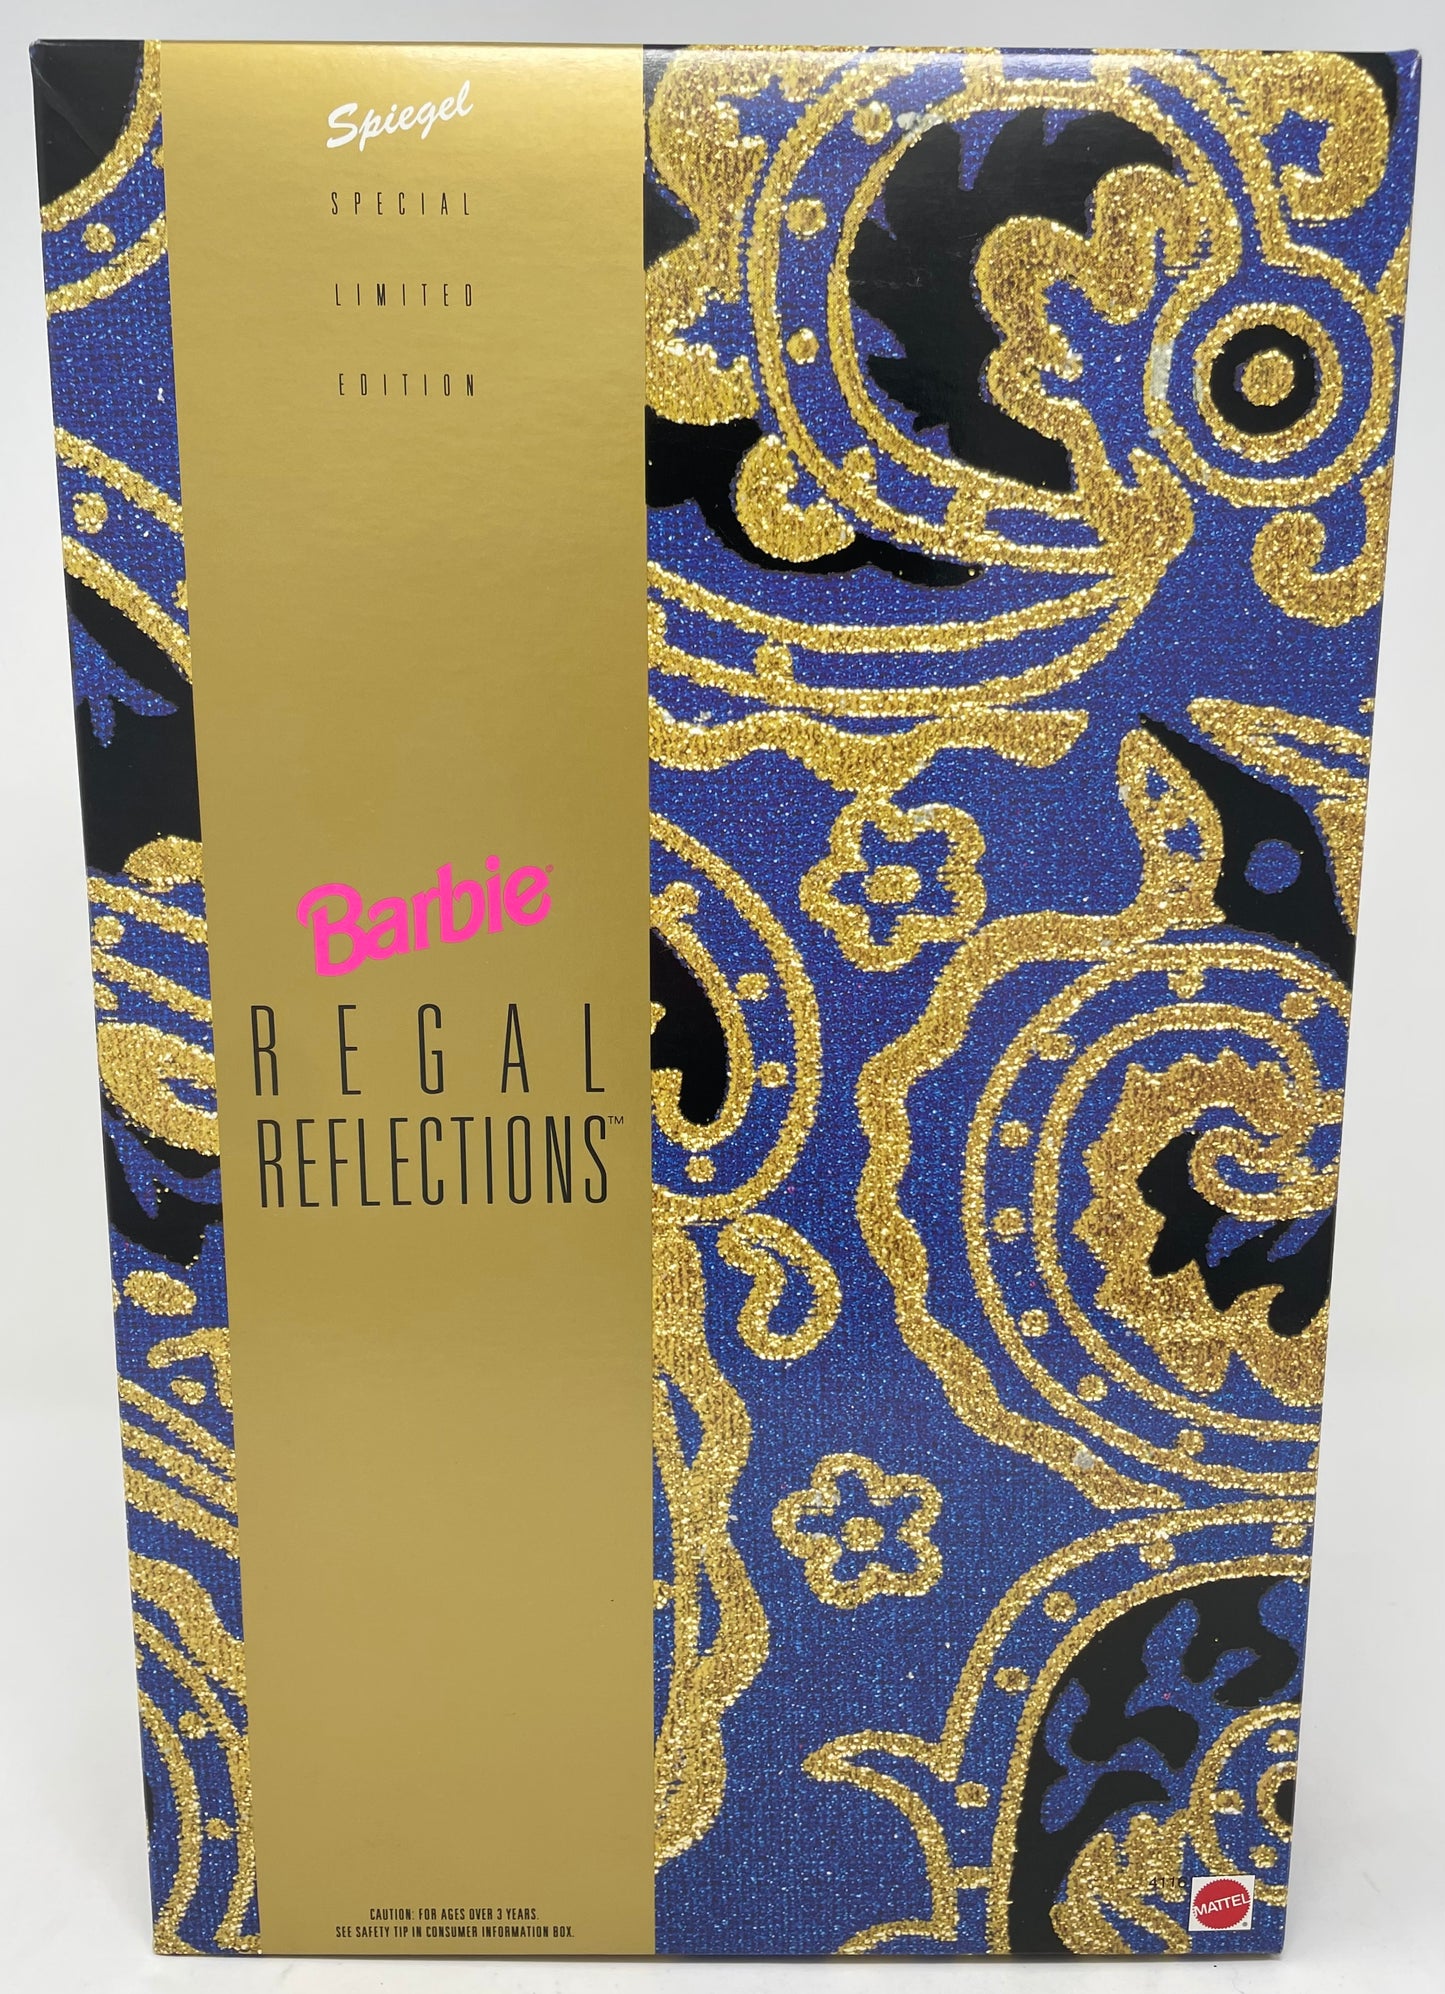 BARBIE REGAL REFLECTIONS - SPIEGEL SPECIAL LIMITED EDITION - #4116 - STILL SEALED IN ORIGINAL BOX - MATTEL 1992